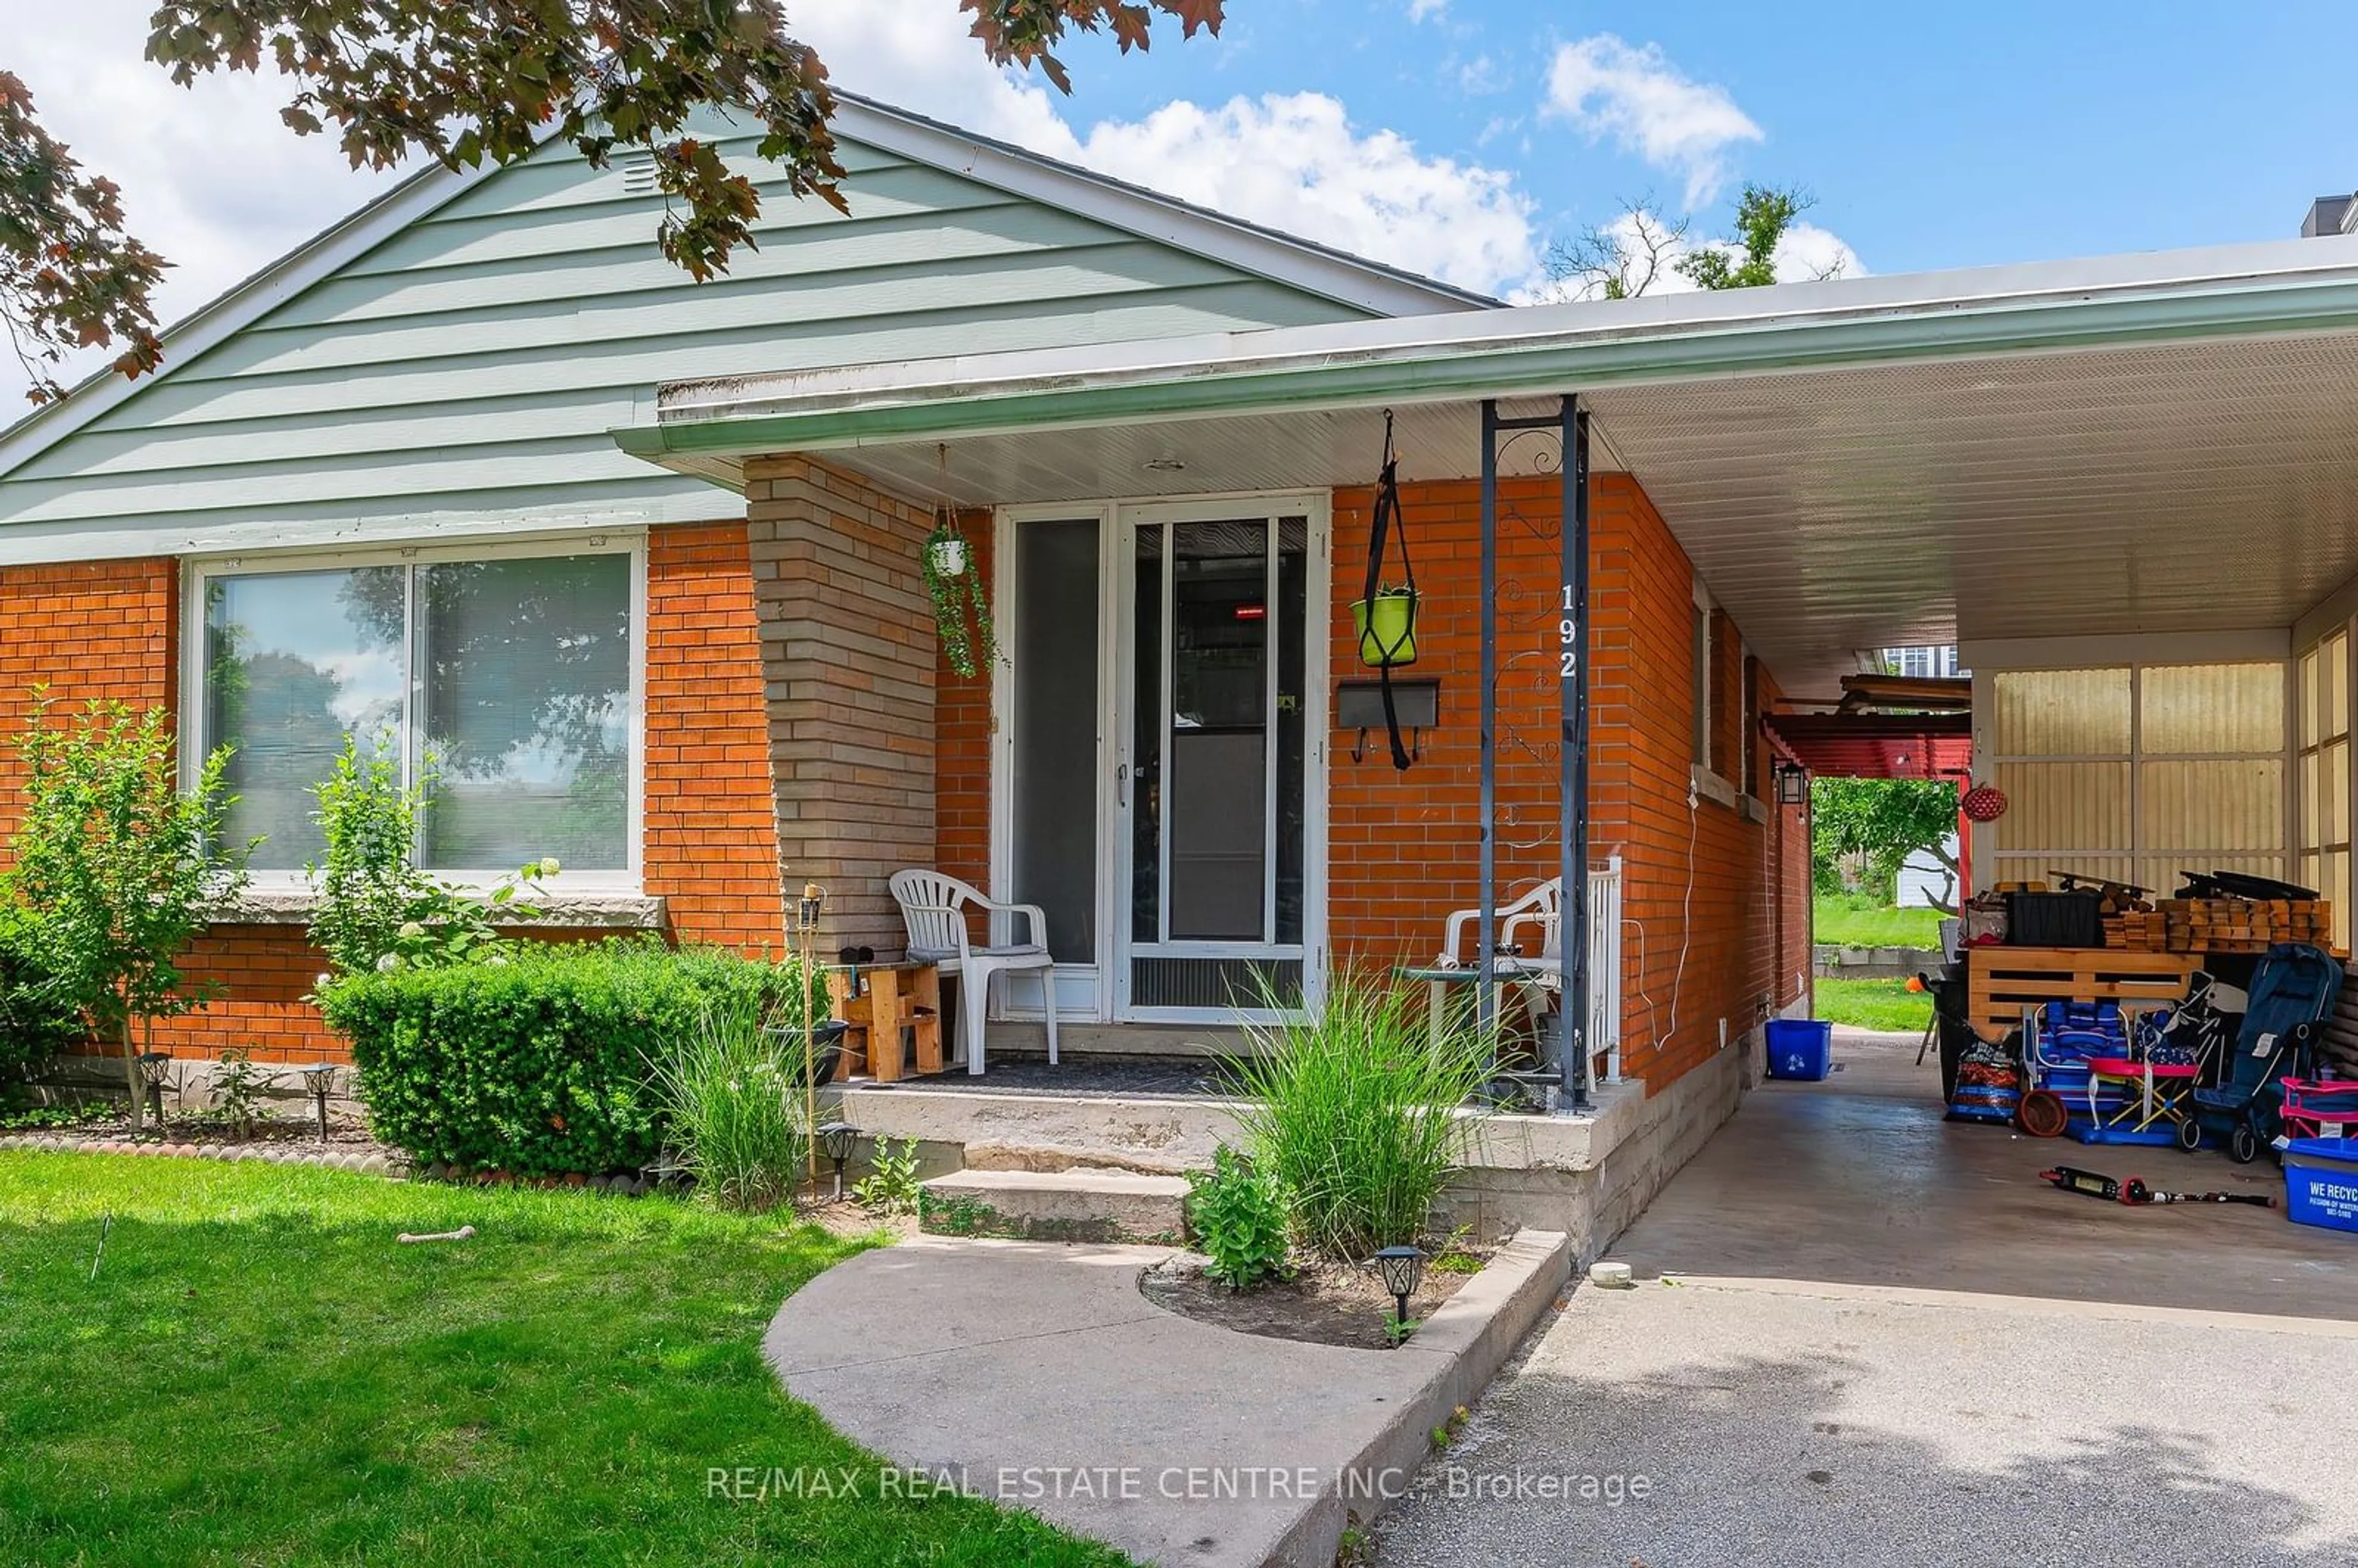 Home with brick exterior material for 192 Sekura St, Cambridge Ontario N1R 3R3